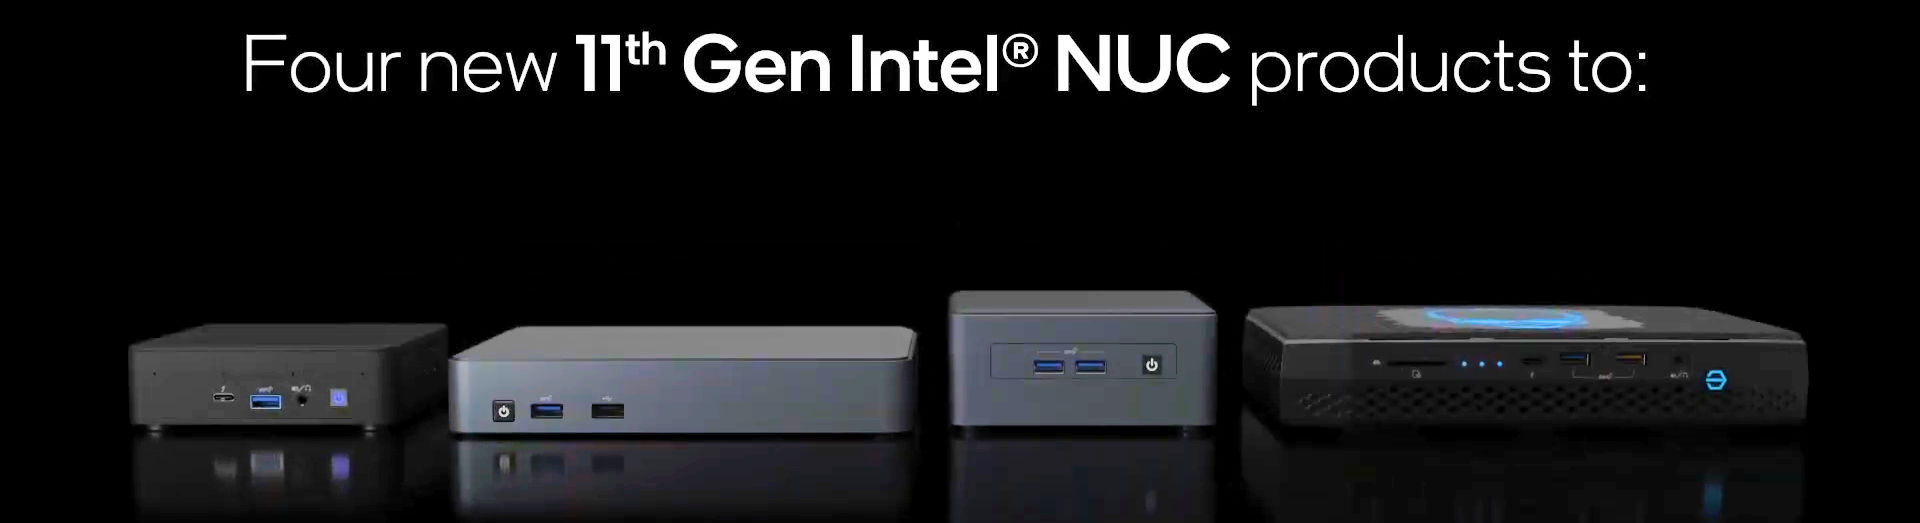  Intel Mini PC, Intel NUC 11 with Newest 11th Gen Core